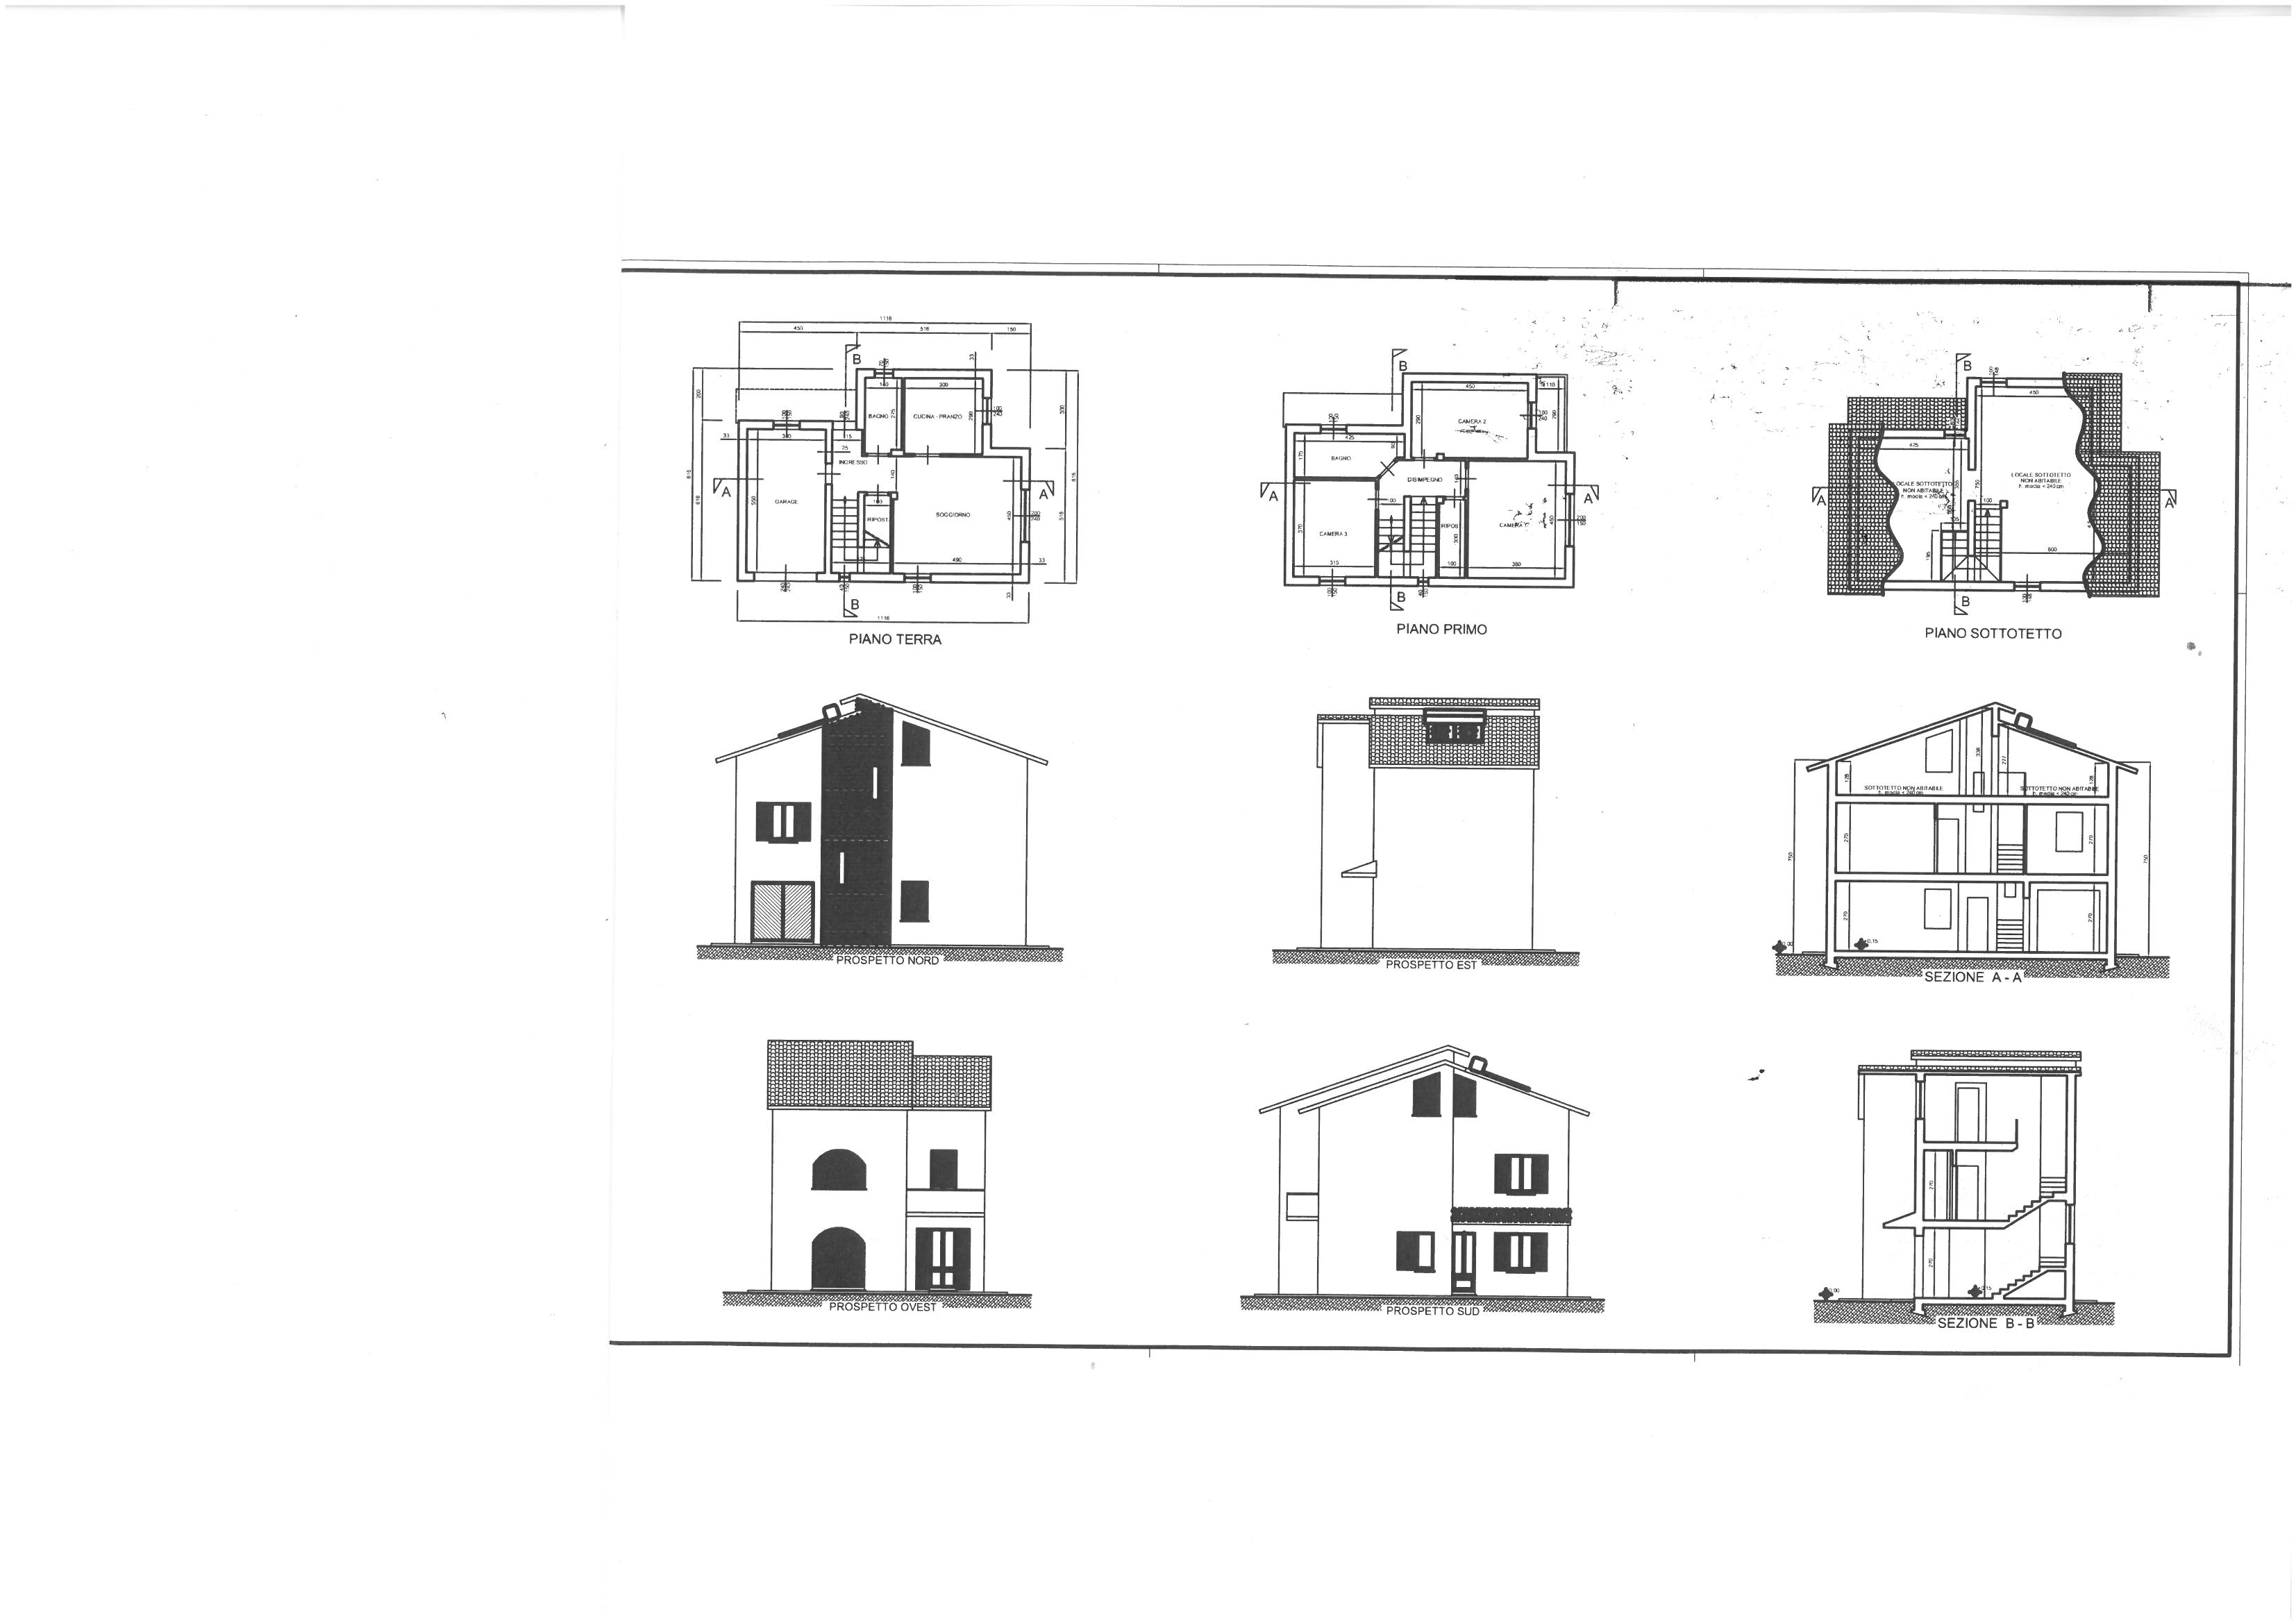 Terreno edif. residenziale in vendita, rif. GMV150 (Planimetria 1/2)